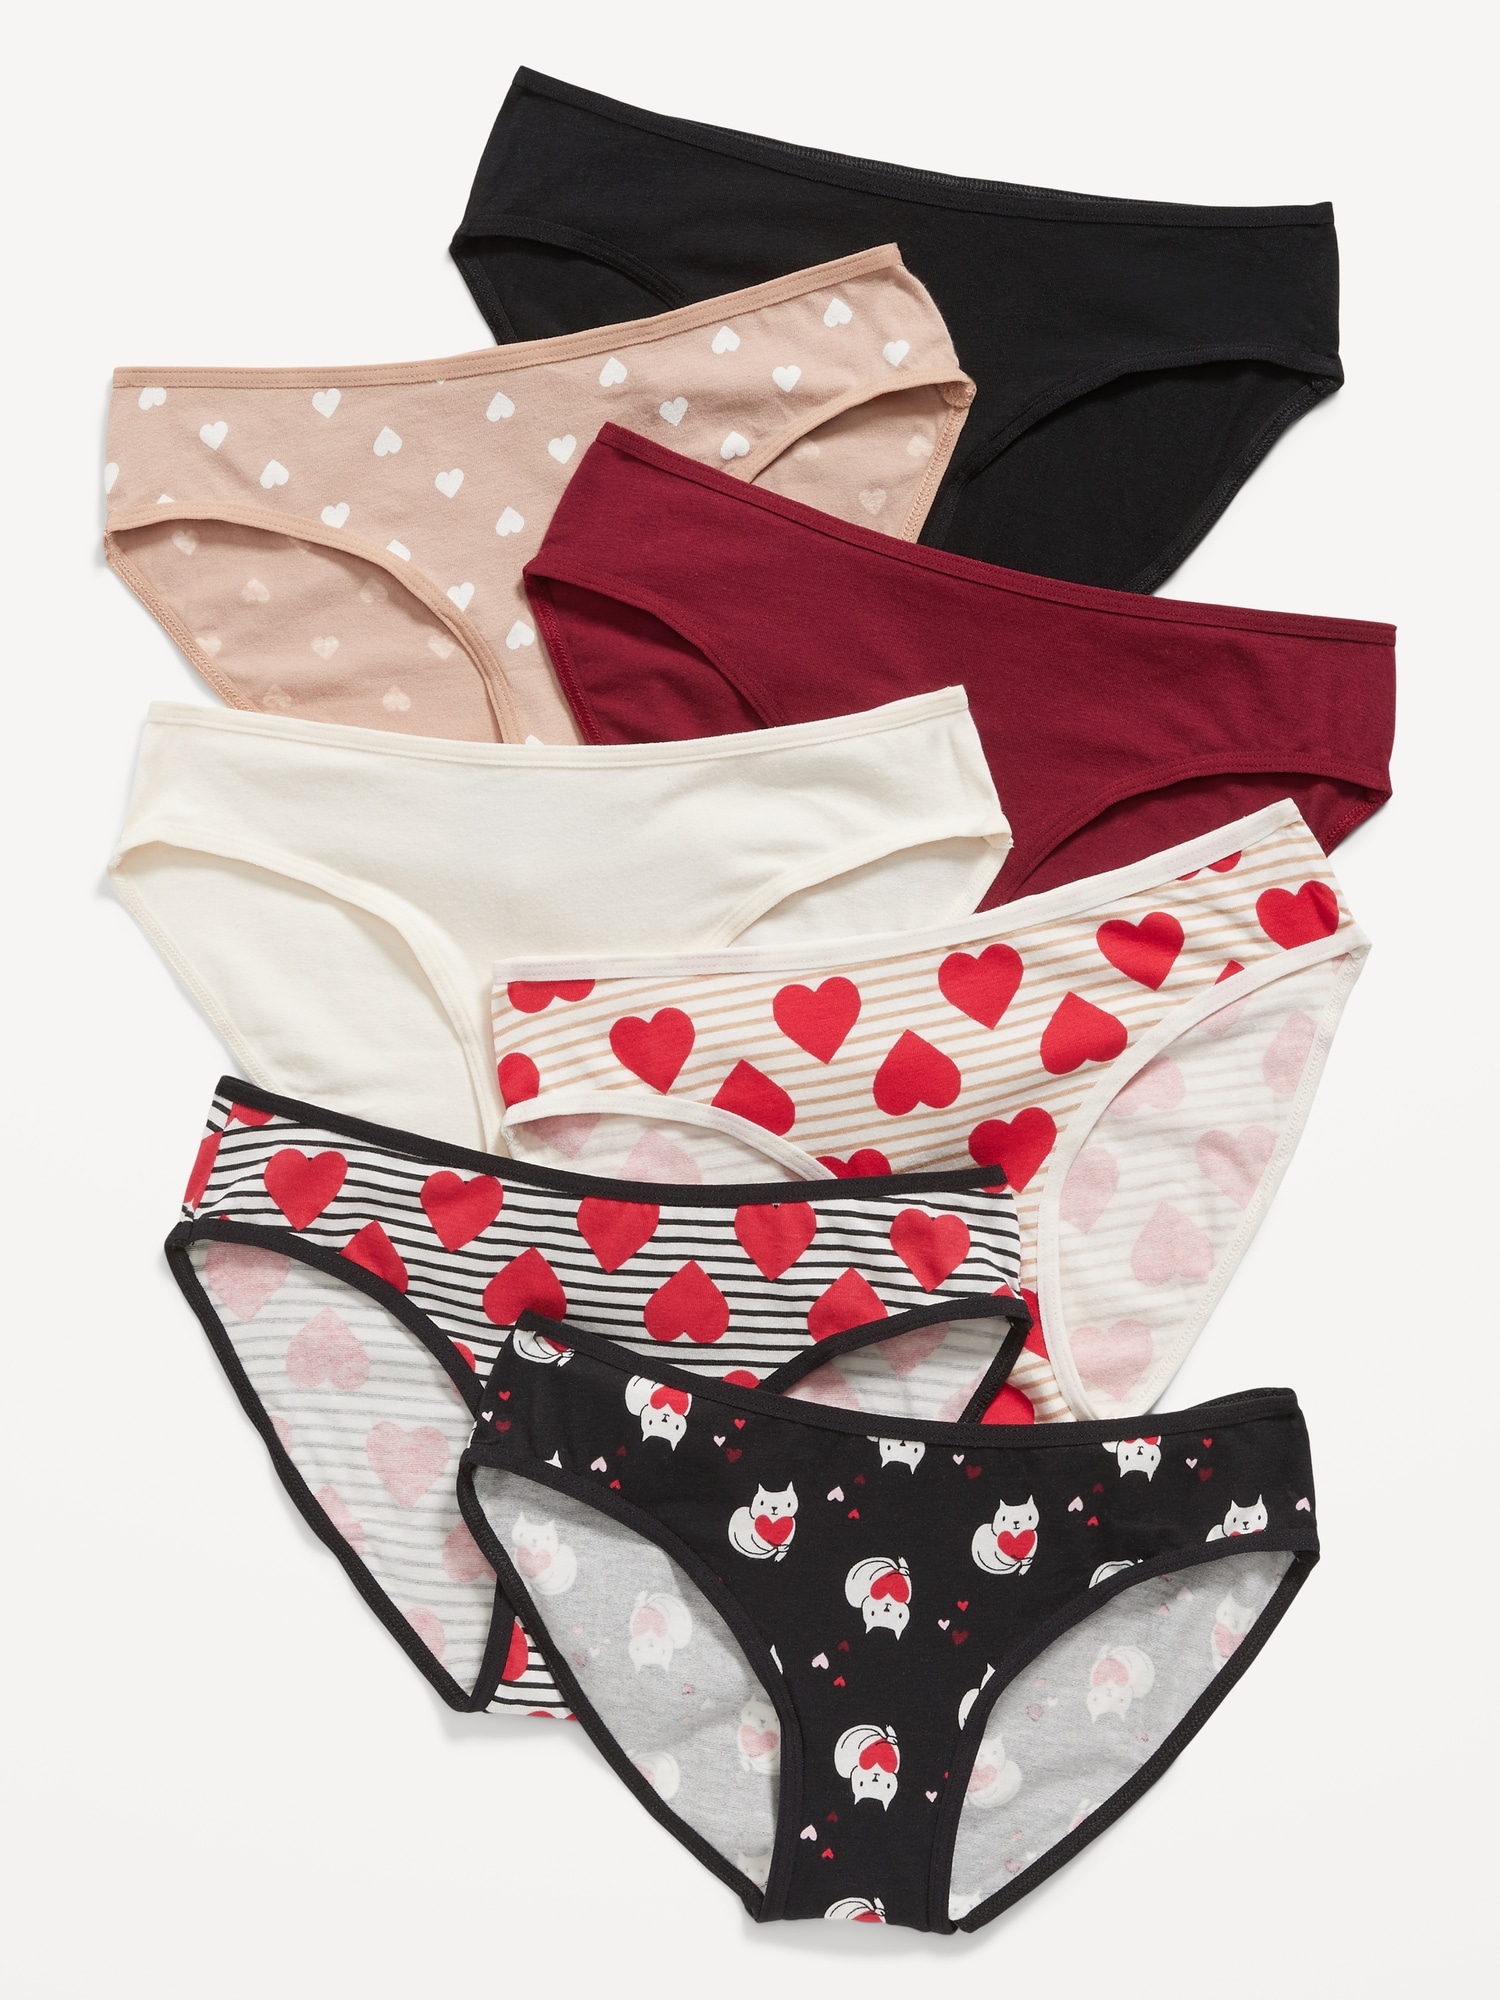 Hipster Underwear 10-Pack for Girls